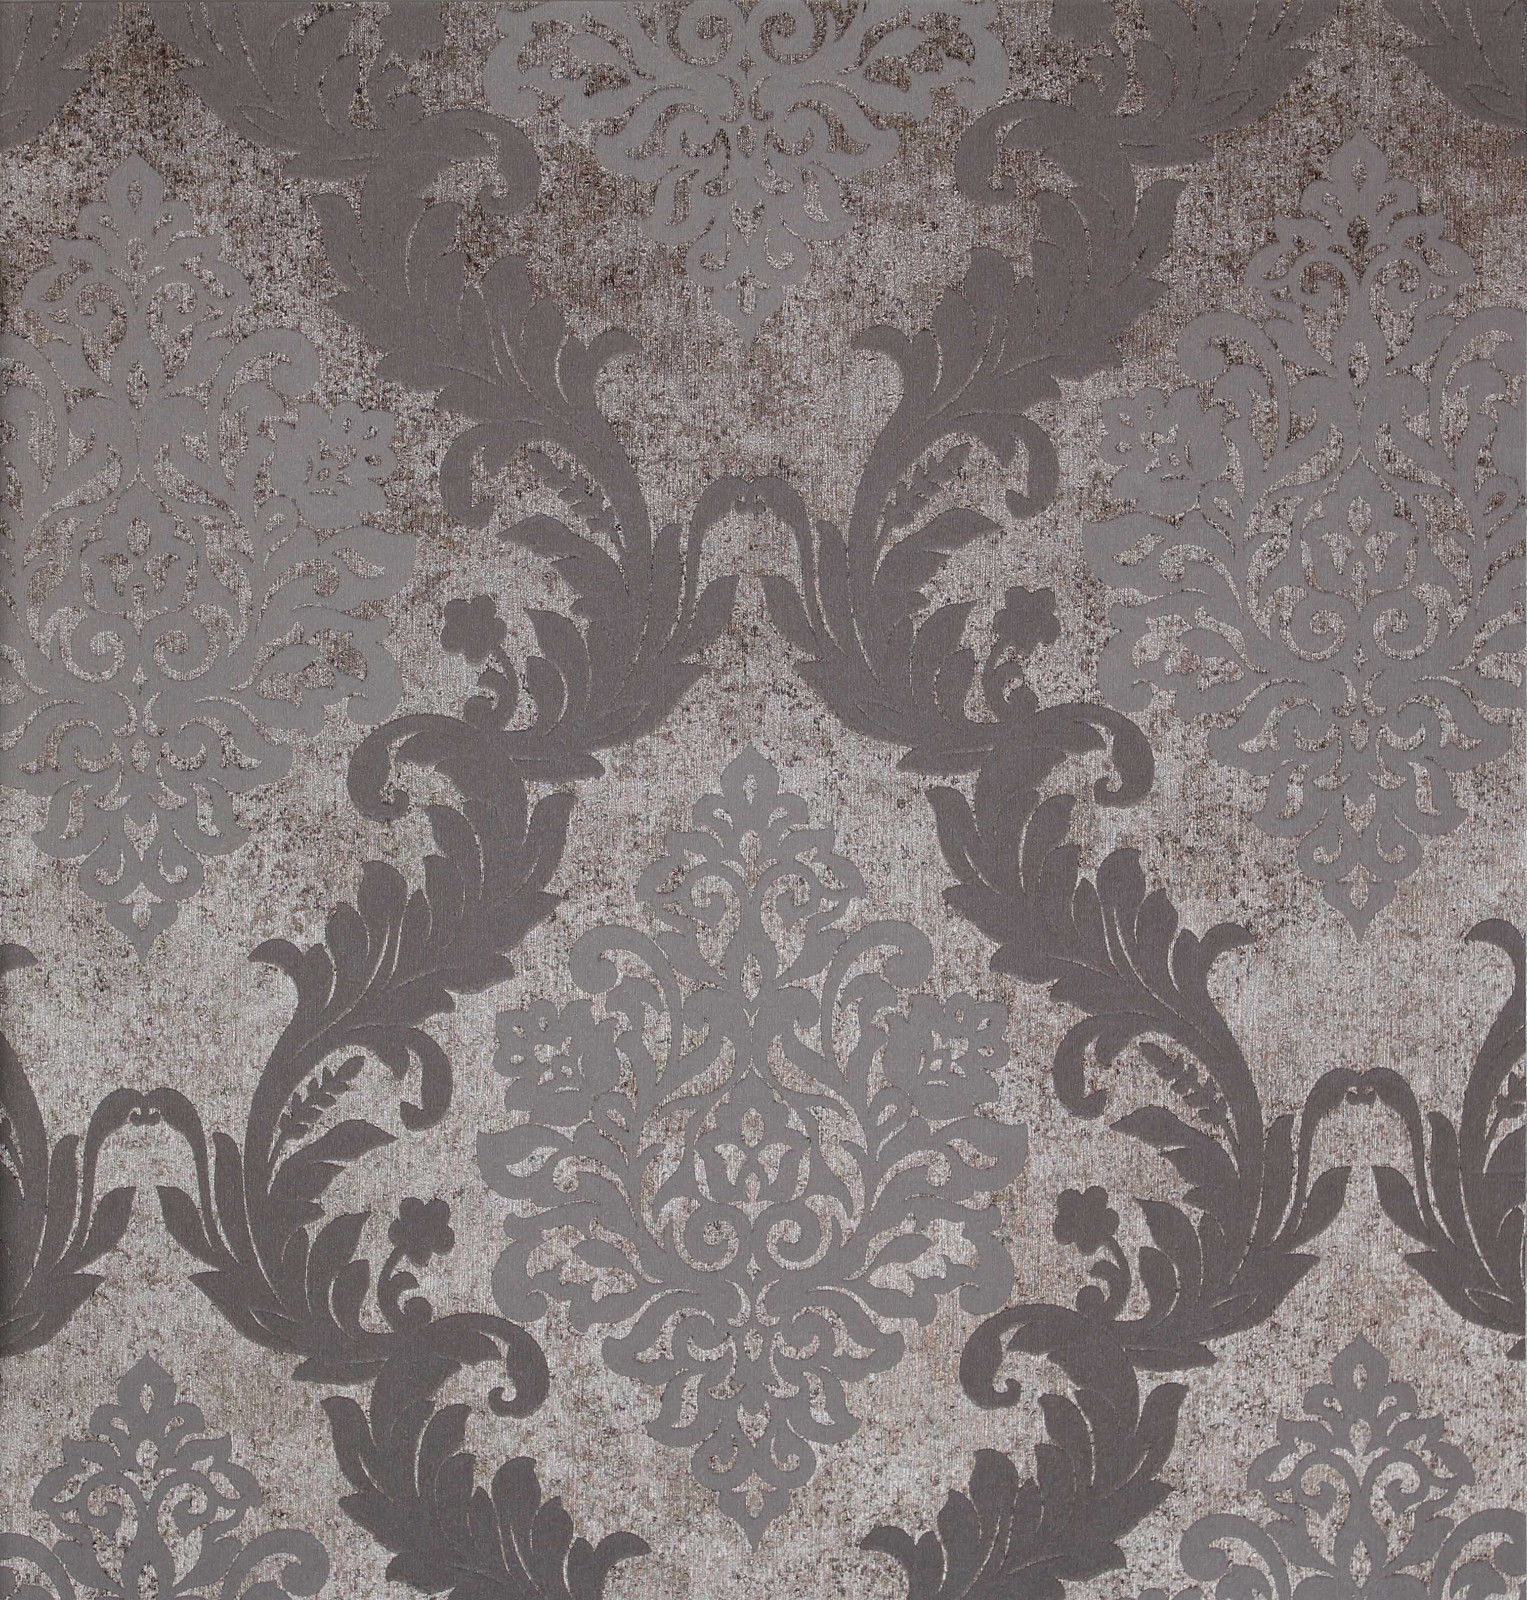 Grey Silver Damask Embossed Texture Background Vinyl Wallpaper